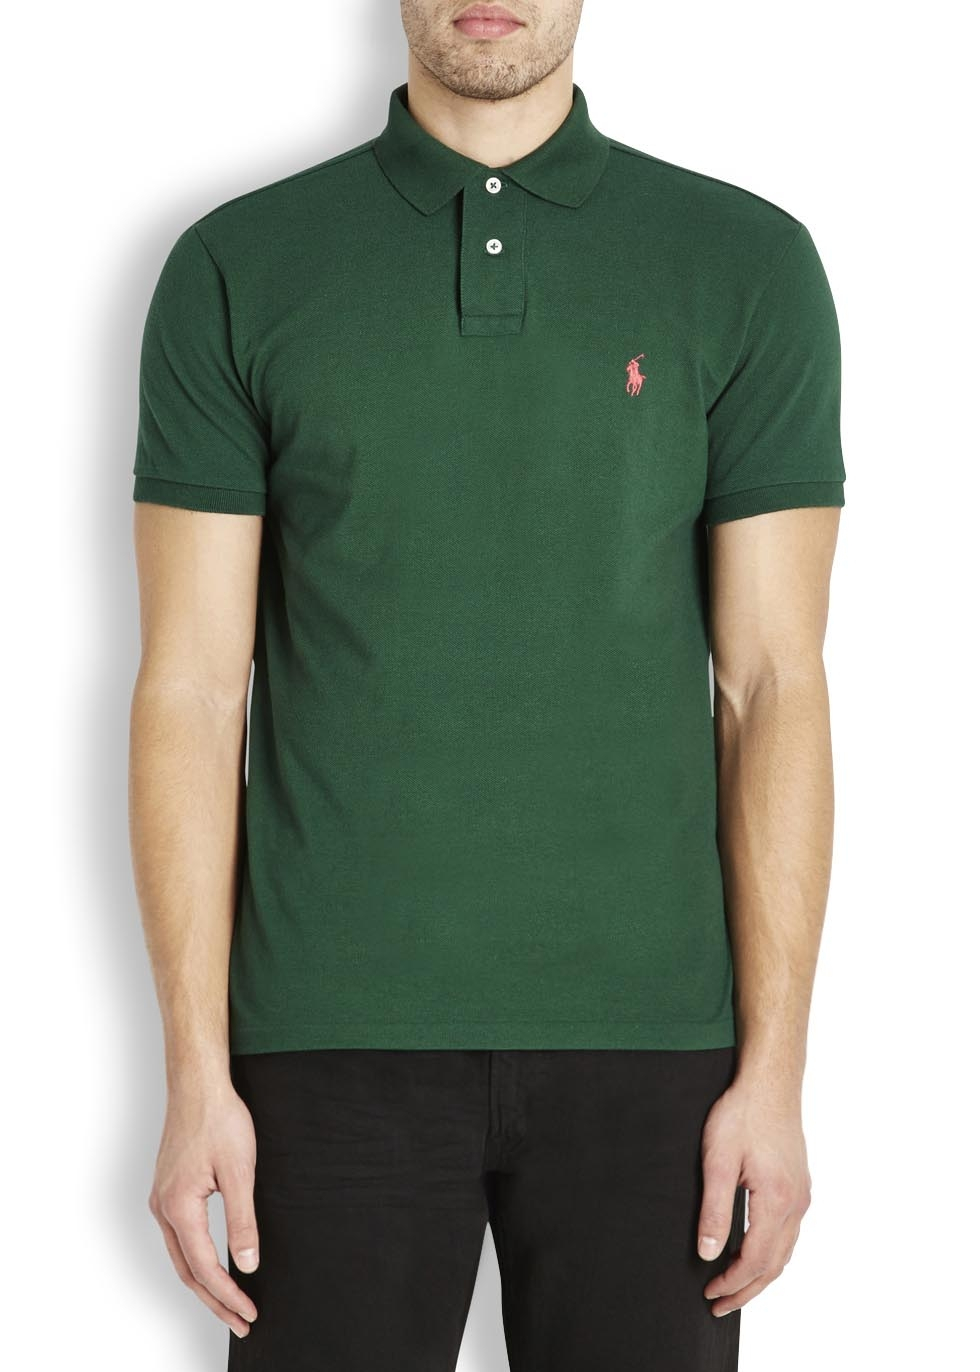 Polo Ralph Lauren Dark Green Piqué Cotton Polo Shirt for Men - Lyst